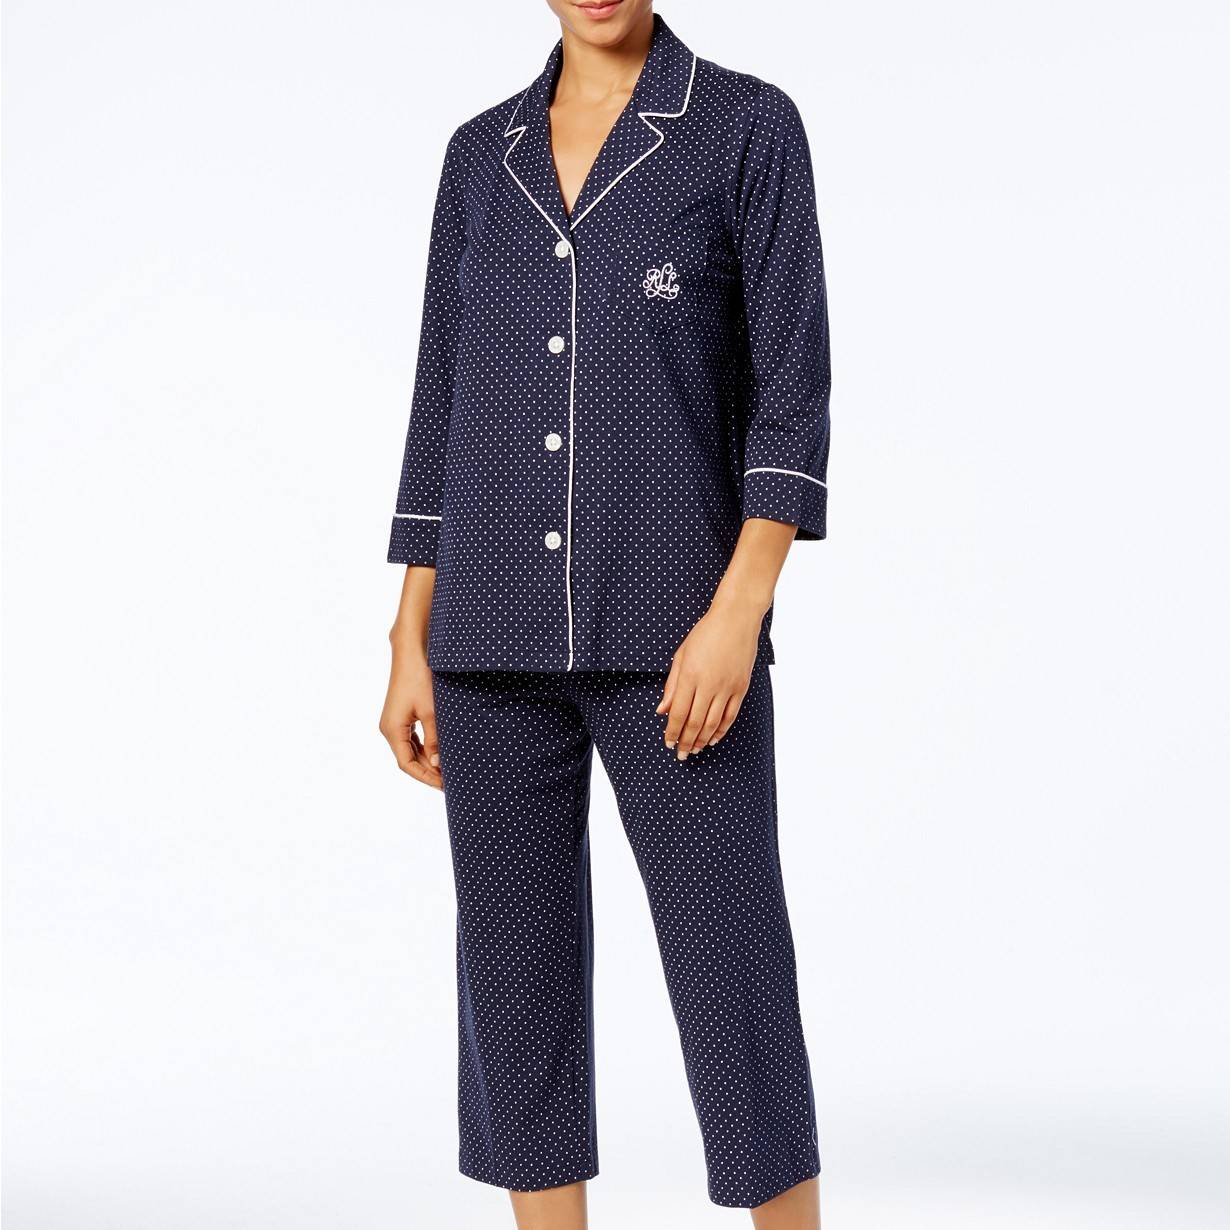 Personlized Products Disney Bathrobe - cotton pajamas for woven pajamas set – SUPER